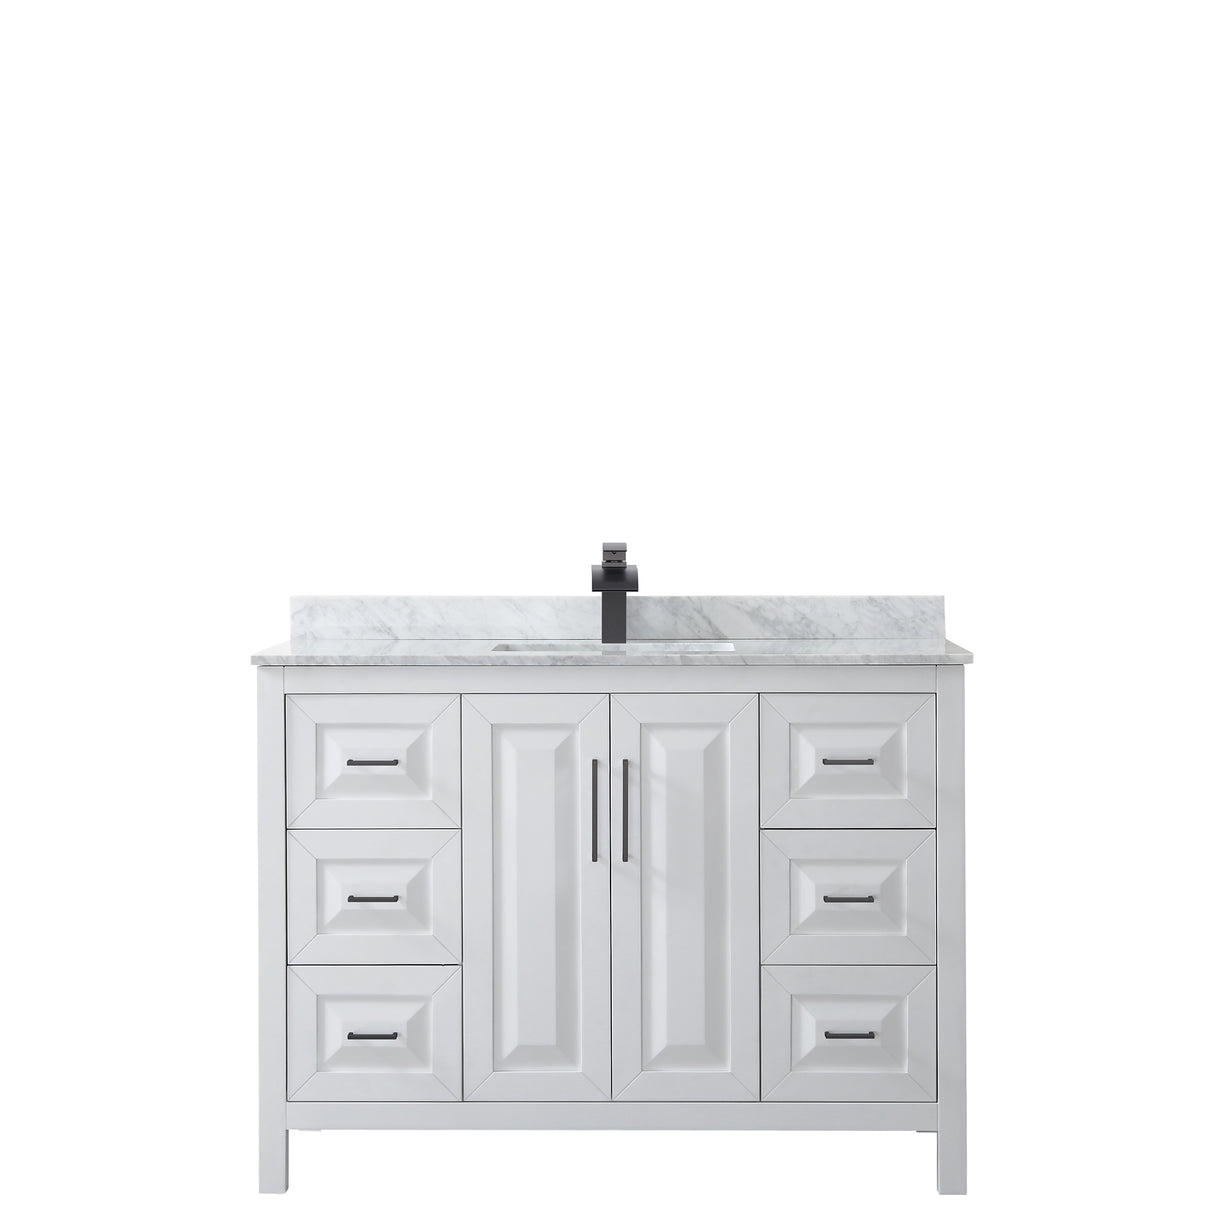 Daria 48 Inch Single Bathroom Vanity in White White Carrara Marble Countertop Undermount Square Sink Matte Black Trim